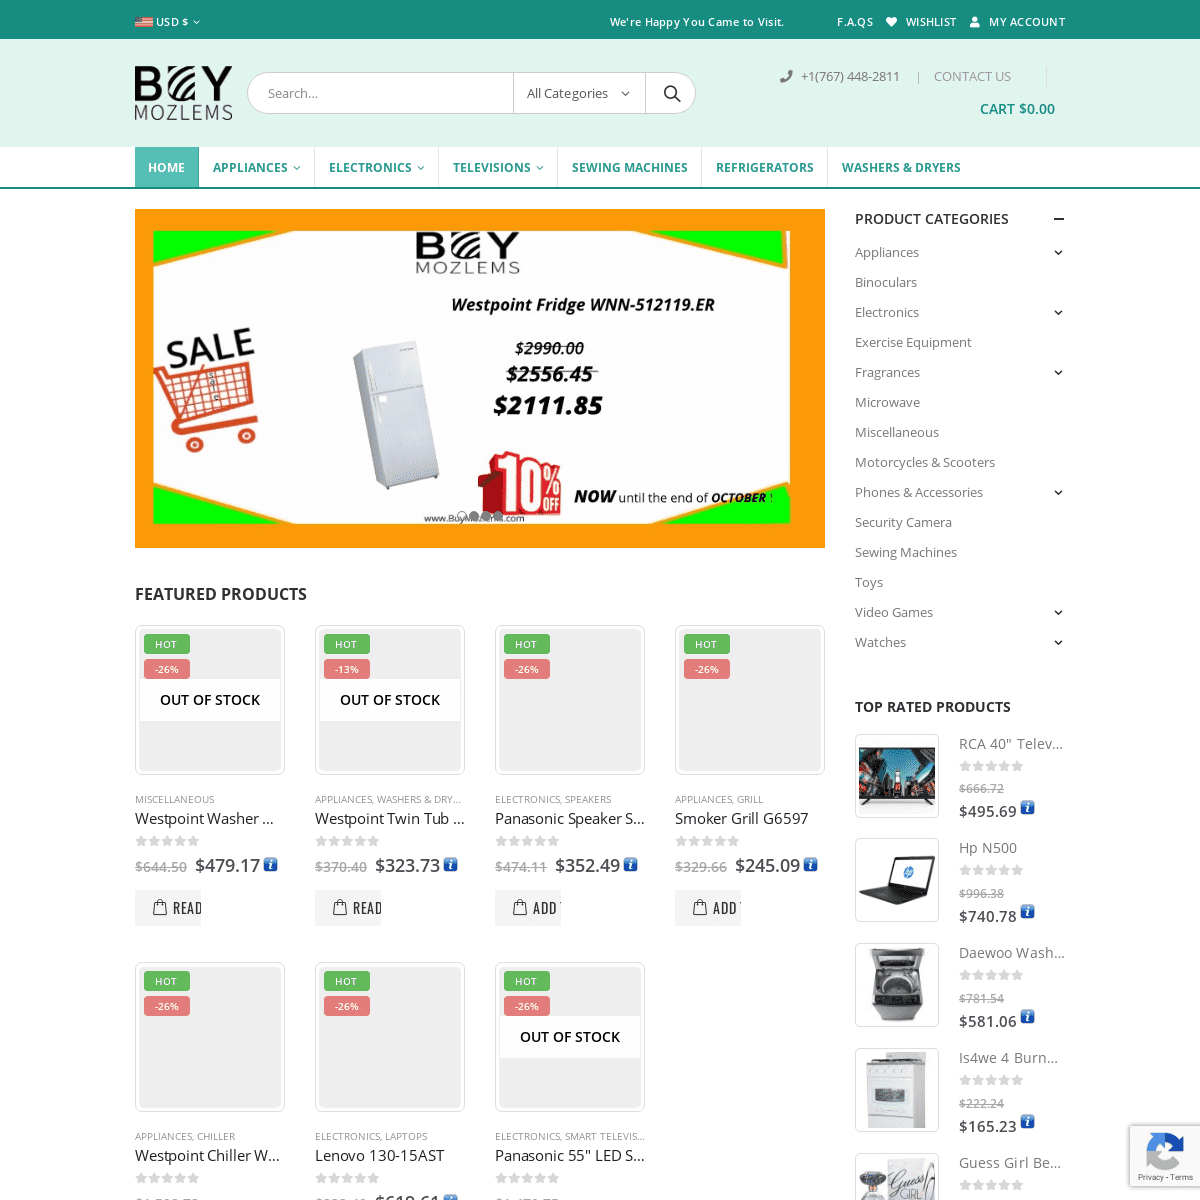 A complete backup of buymozlems.com